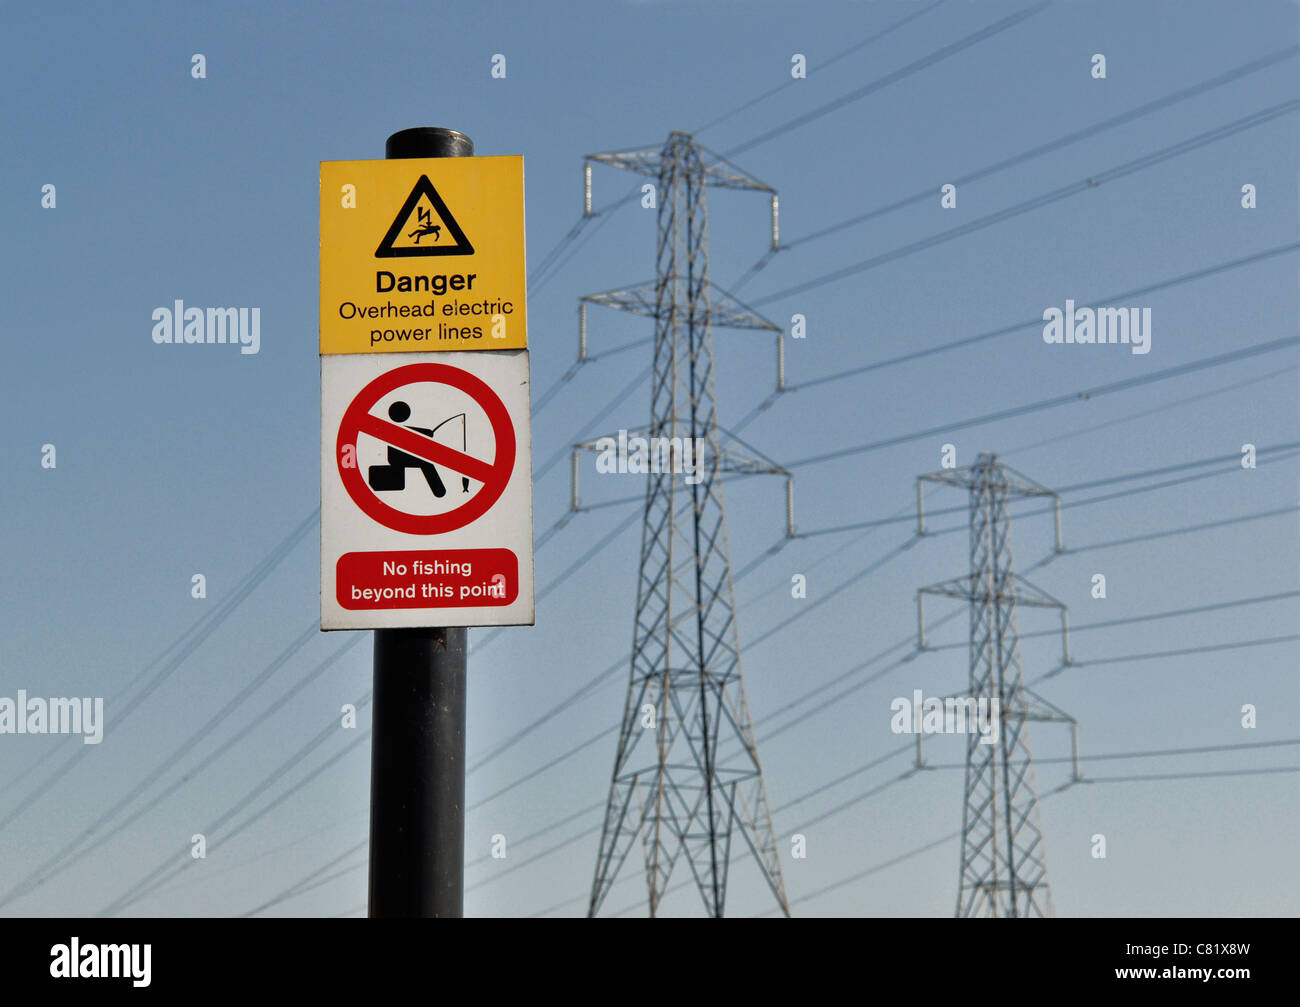 https://c8.alamy.com/comp/C81X8W/danger-no-fishing-overhead-electric-power-lines-sign-in-front-of-pylons-C81X8W.jpg